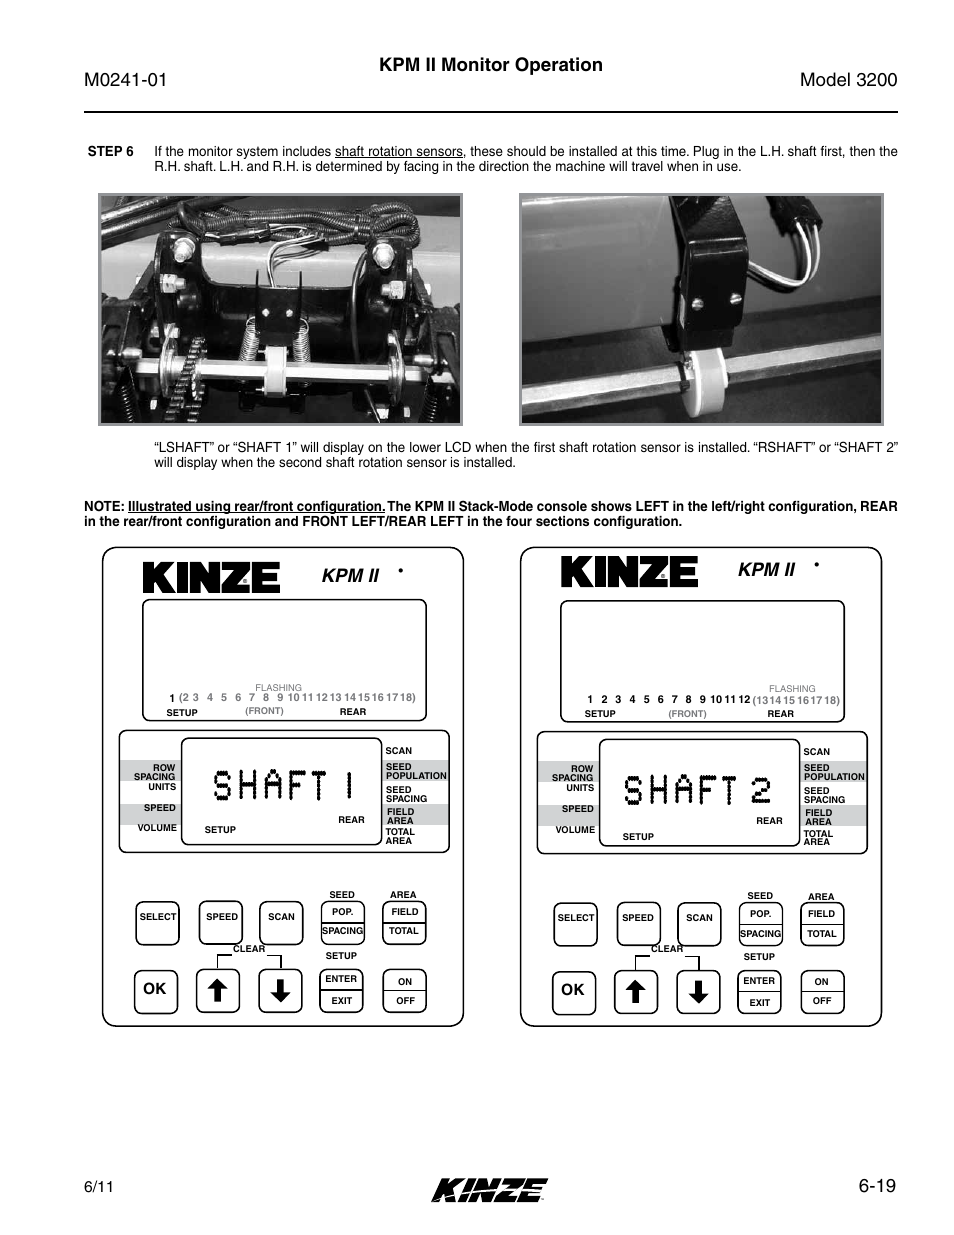 19 kpm ii monitor operation, Kpm ii | Kinze 3200 Wing-Fold Planter Rev. 7/14 User Manual | Page 109 / 192